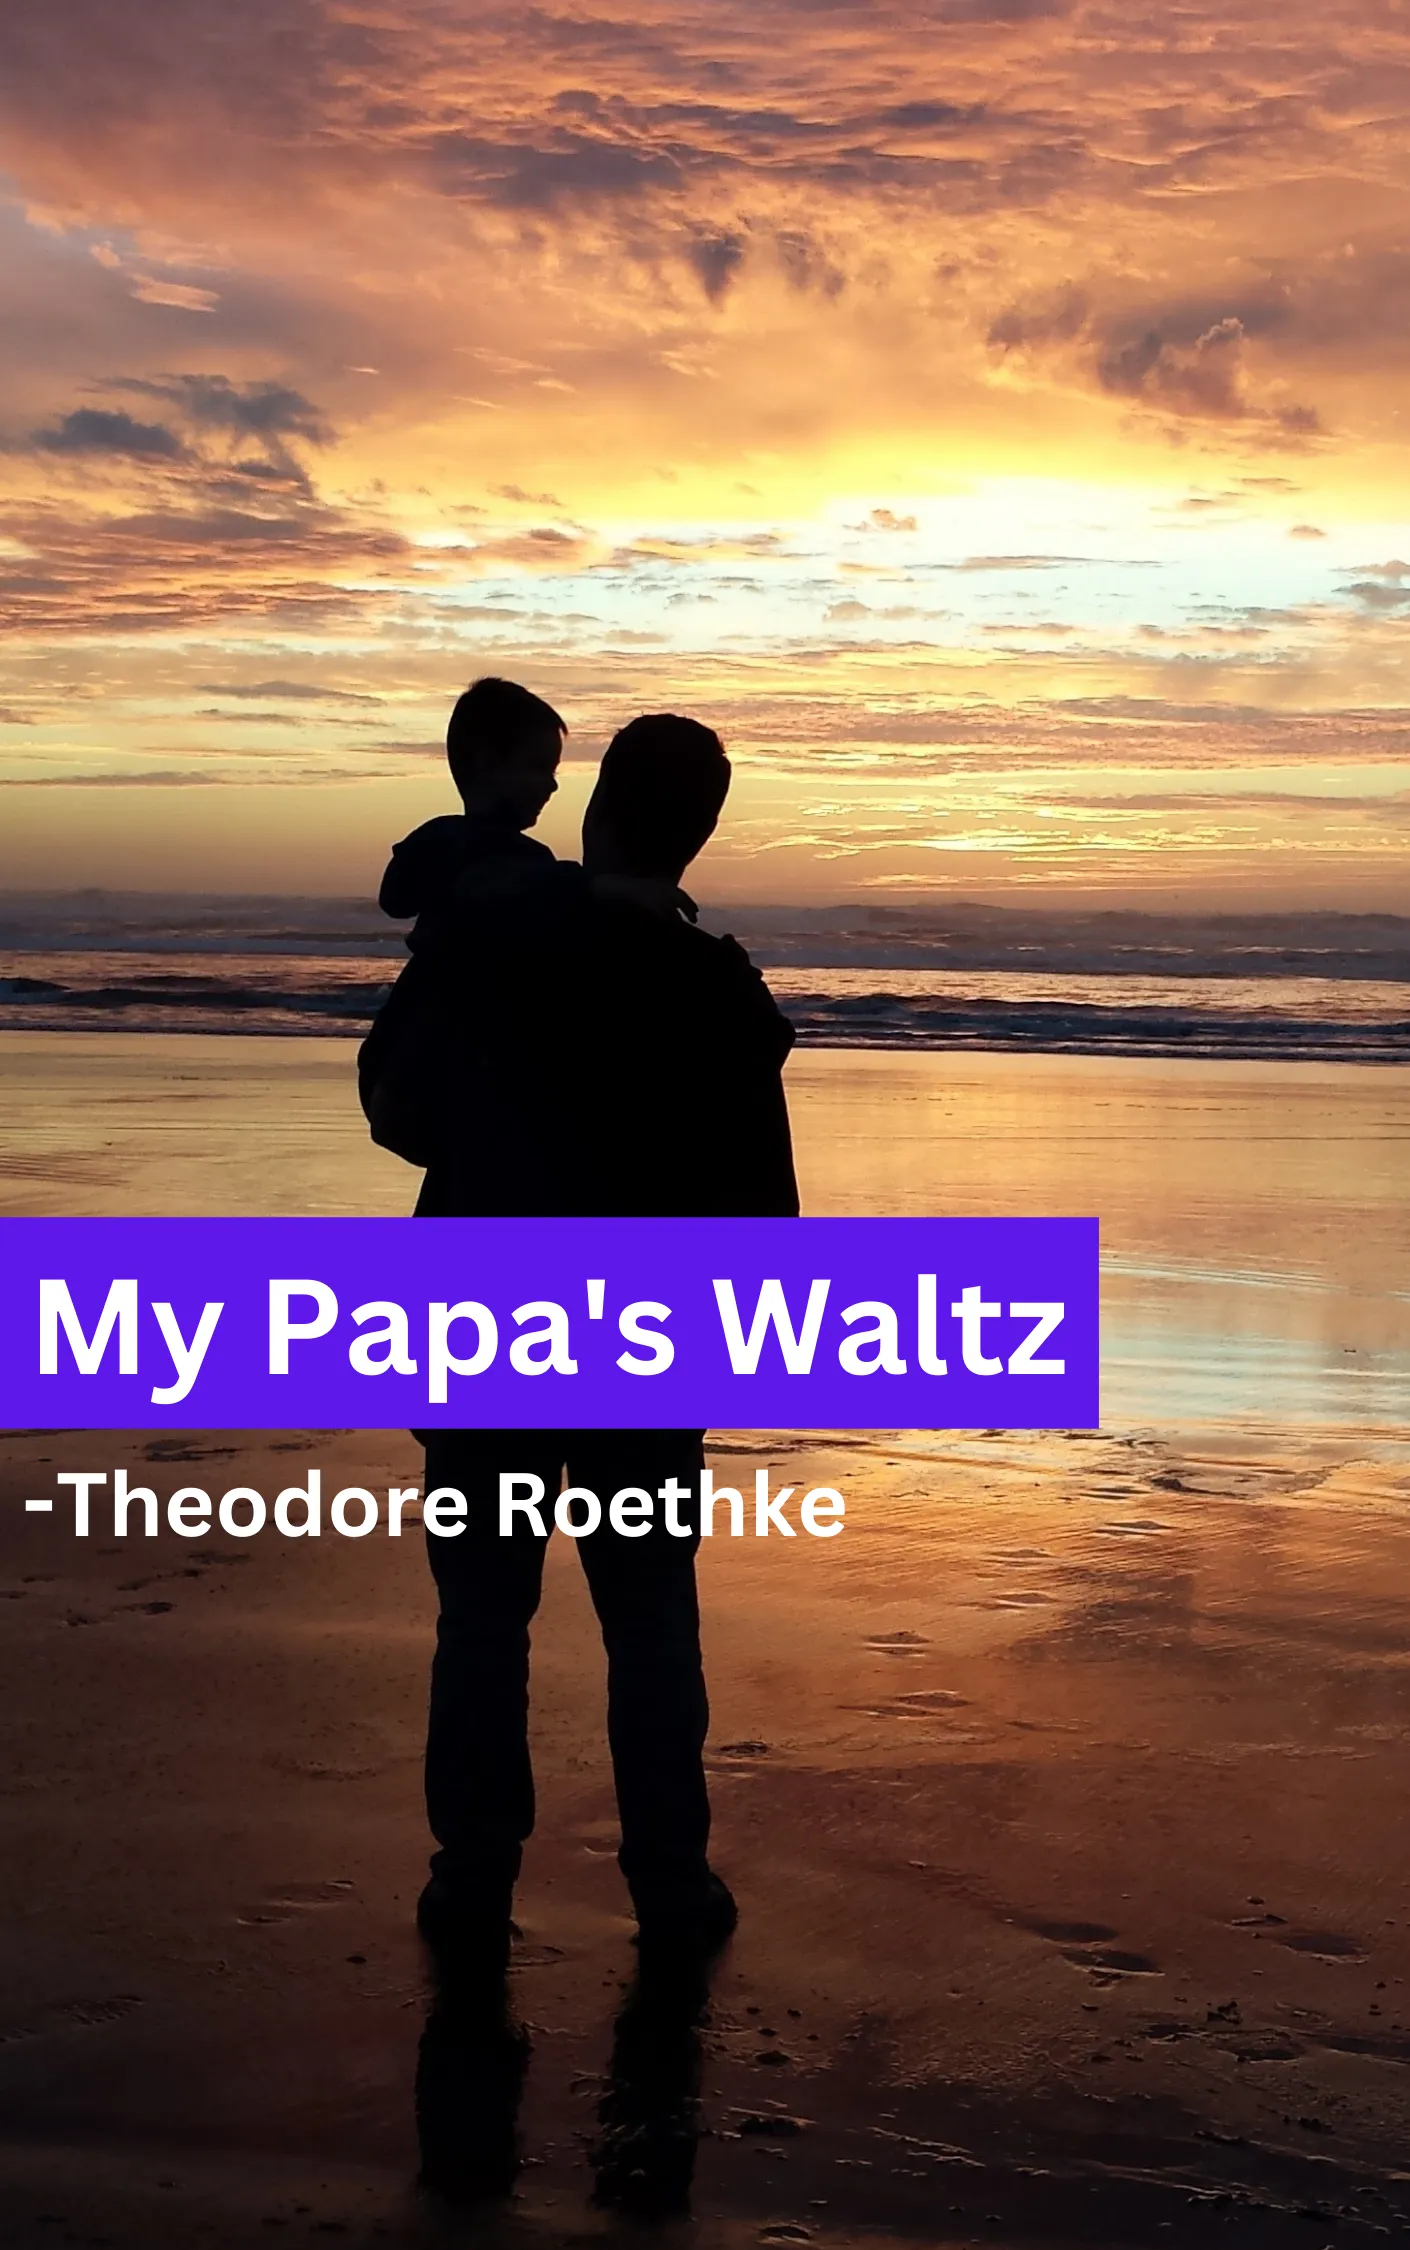 My Papa's Waltz Summary & Analysis